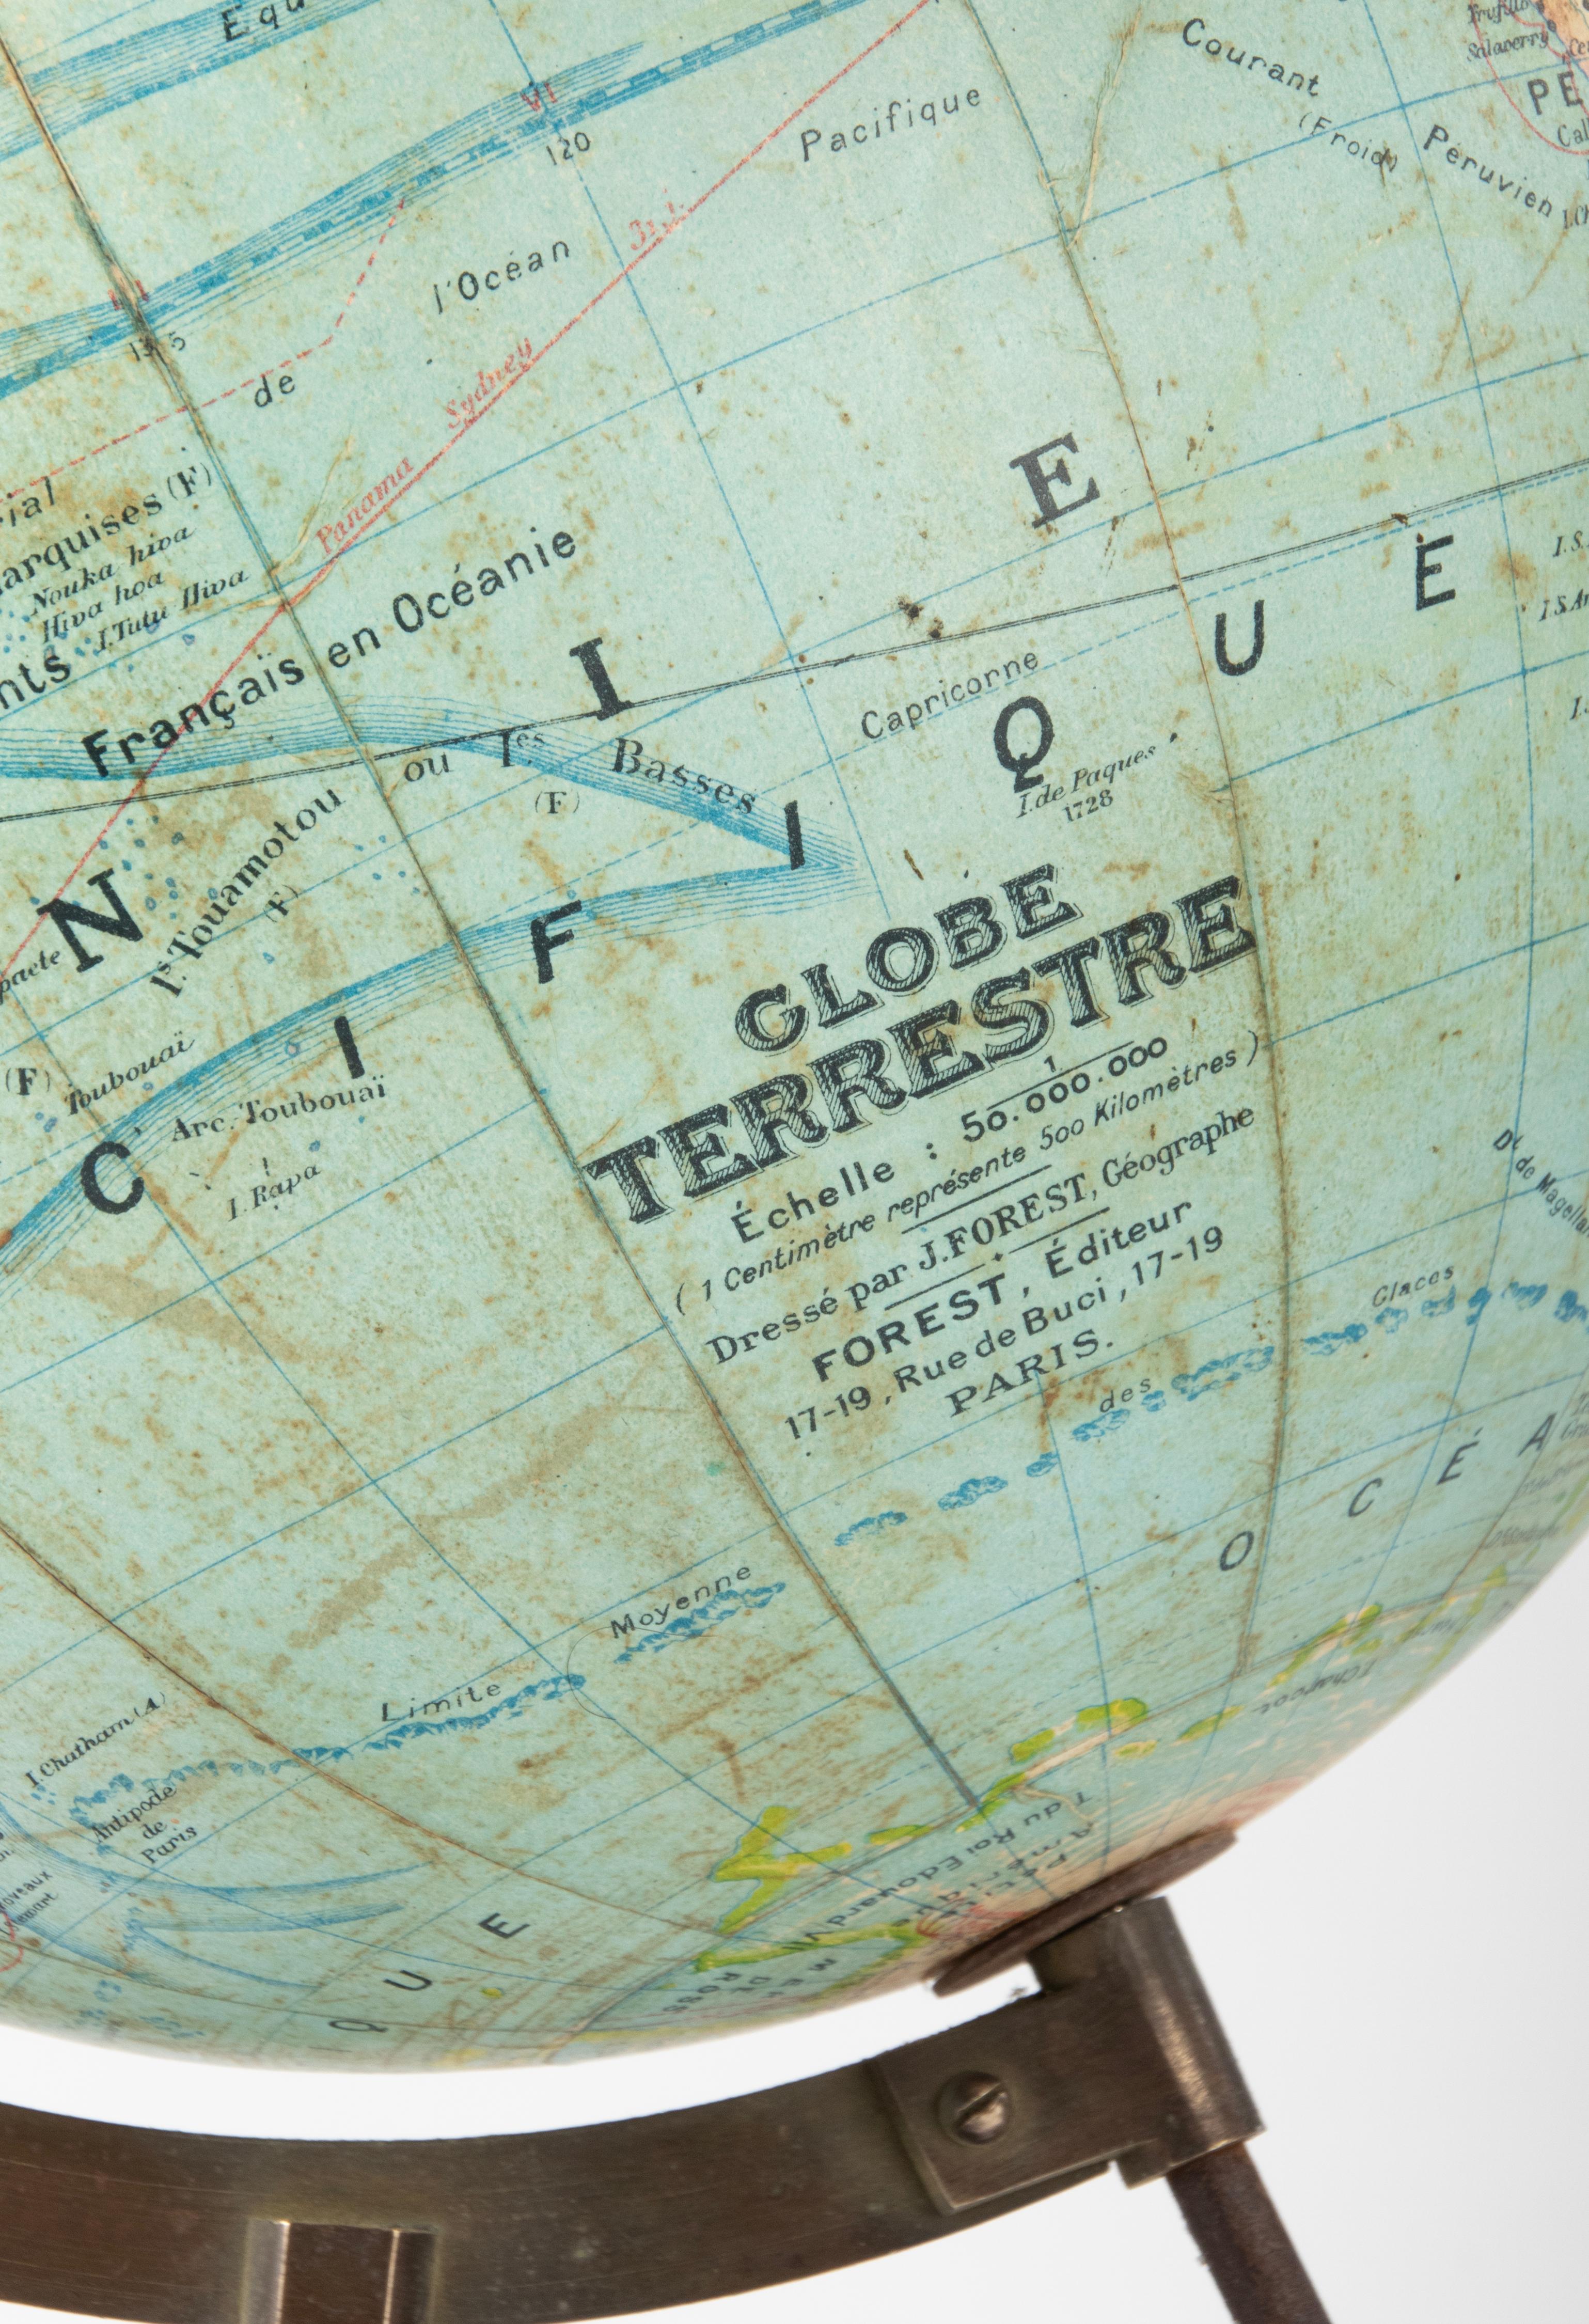 Late 19th Century World Globe - Edited by J. Forest Paris - Globe Terrestre 4